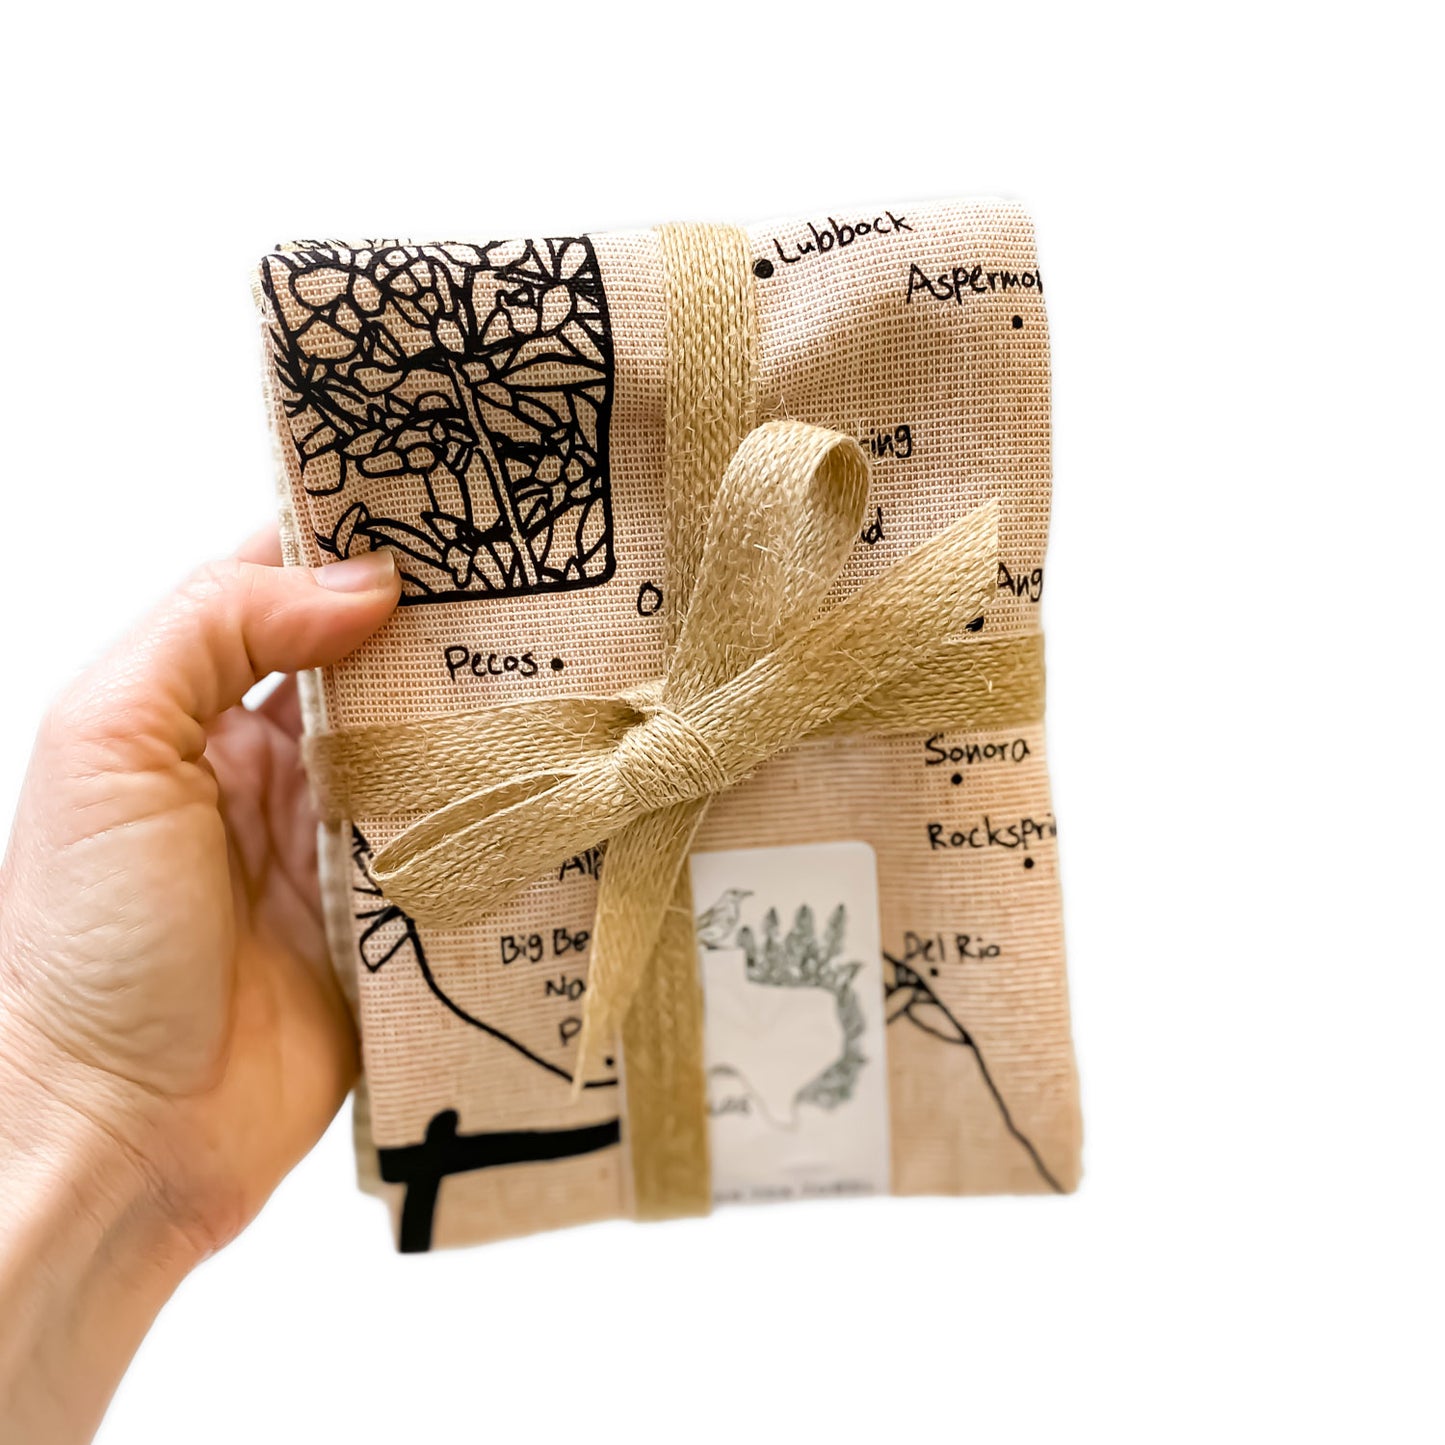 TEXAS & ABC Herbs & Spices Botanical Handprinted Artisan Tea Towel Set